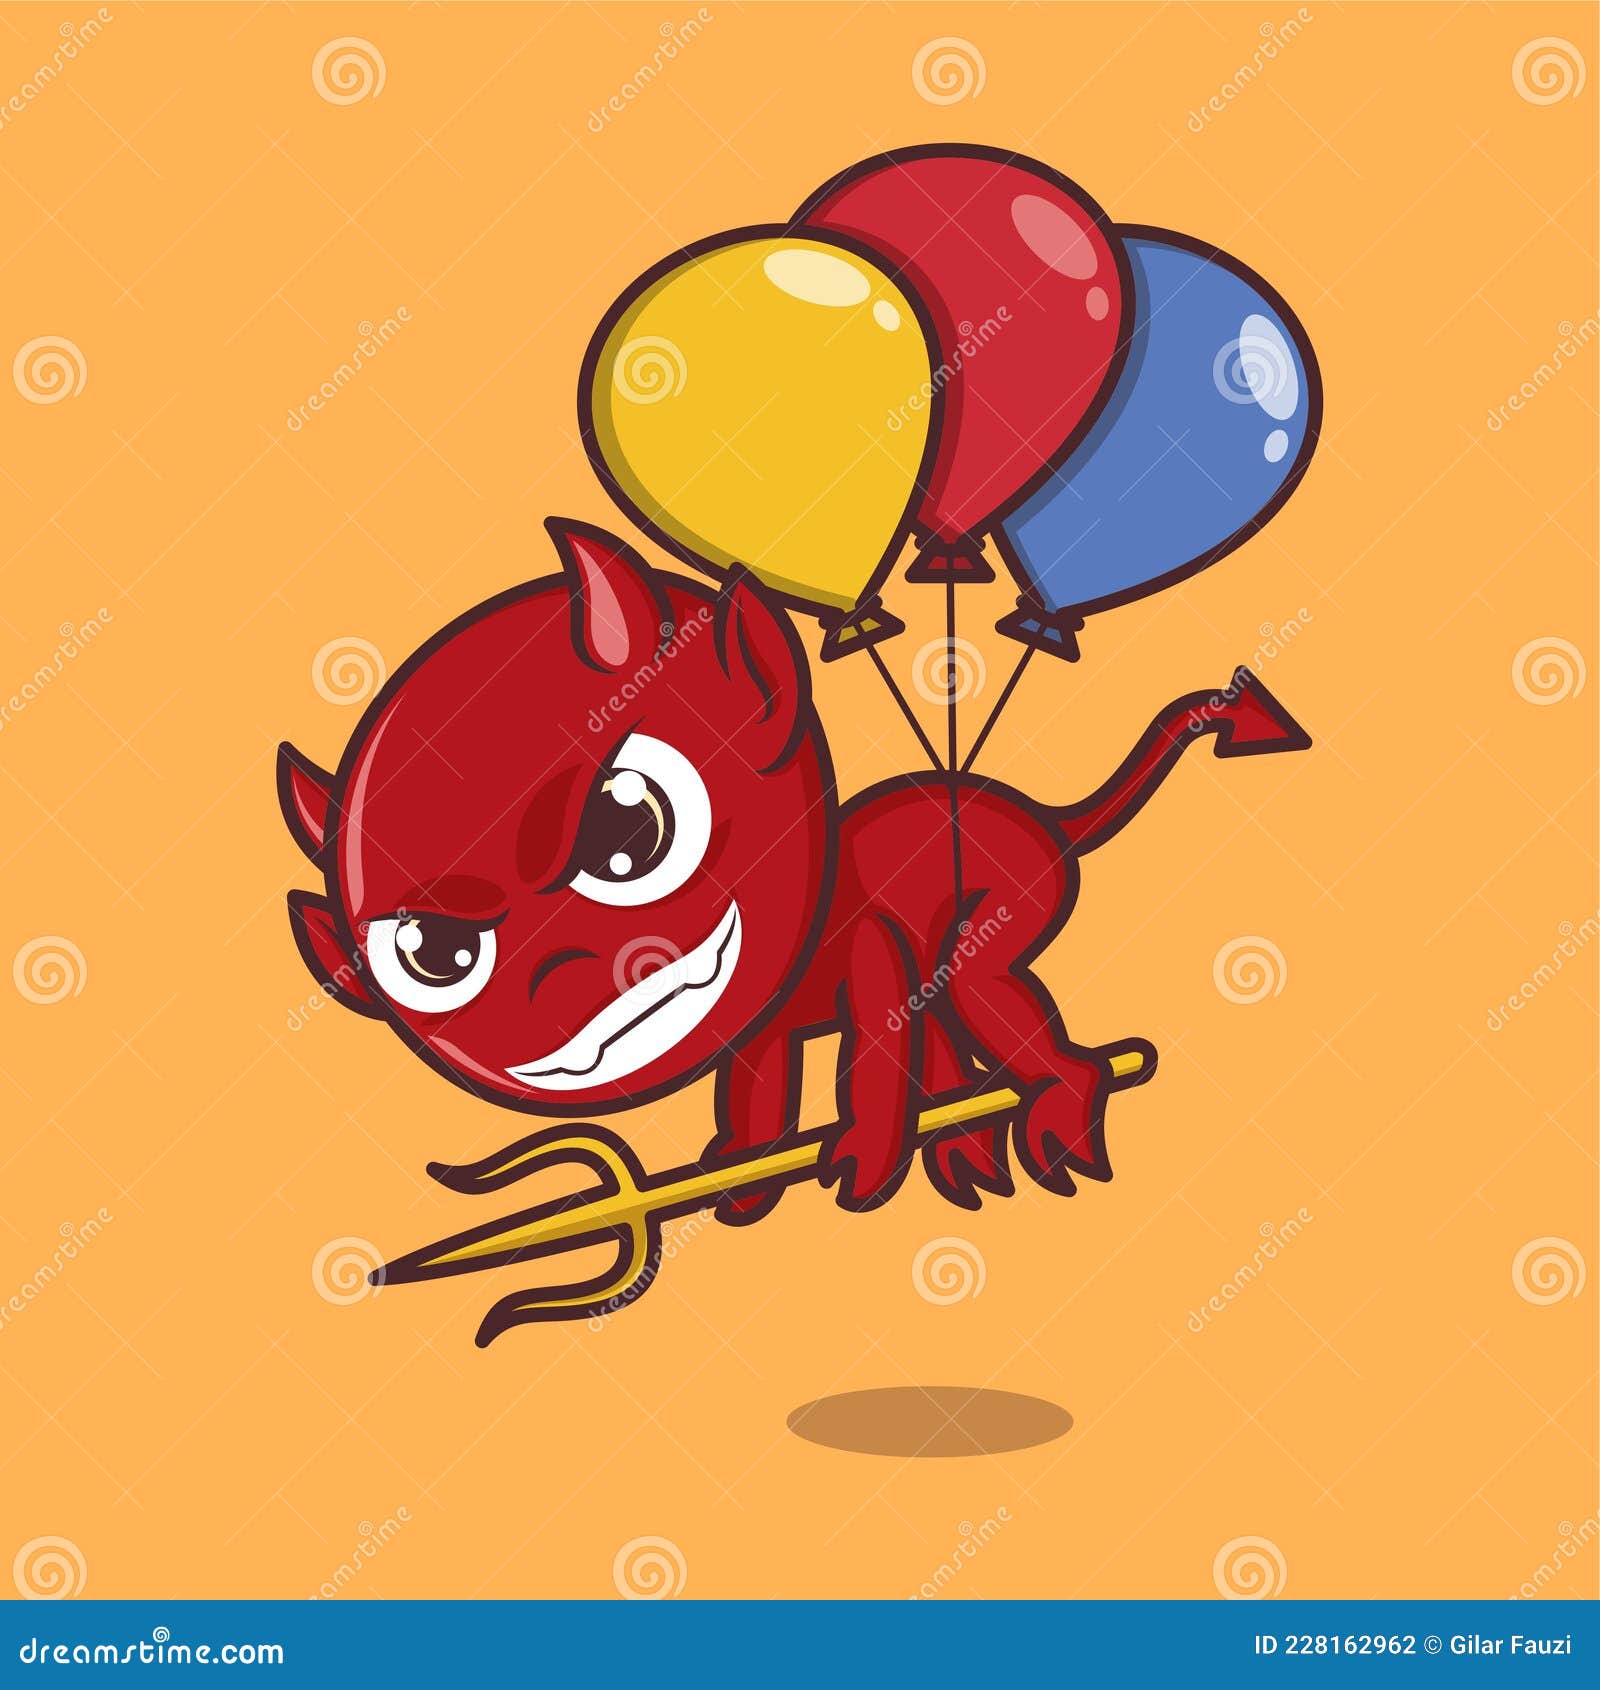 Cute devi balloon stock vector. Illustration of design - 228162962